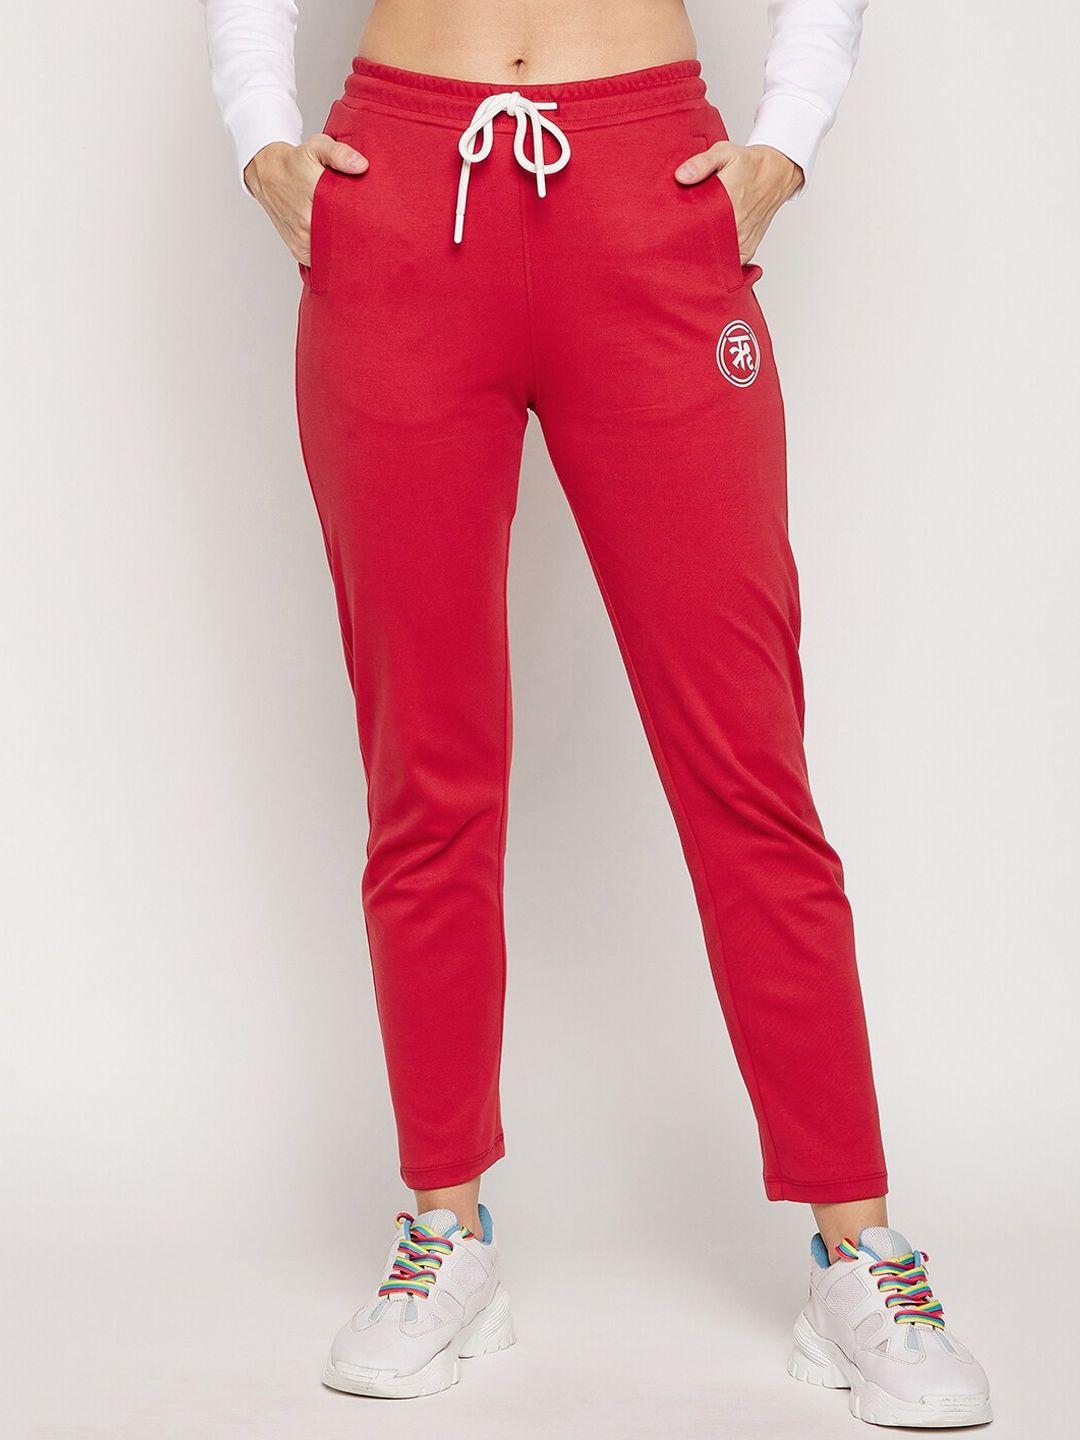 edrio women red solid slim-fit track pants